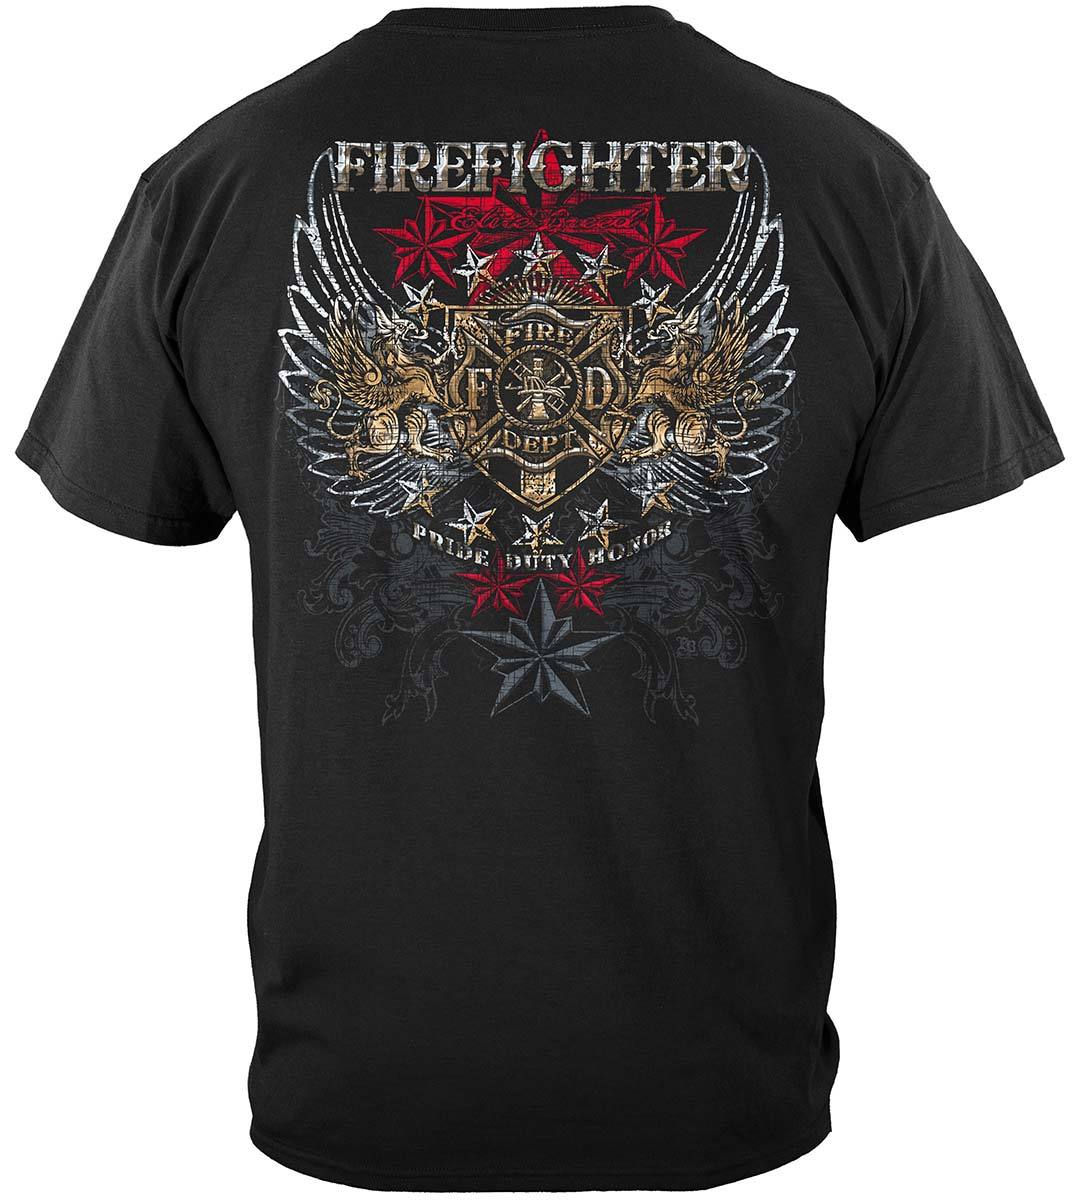 Elite Breed Firefighter Pride Duty Honor Silver Foil Premium Hooded Sweat Shirt